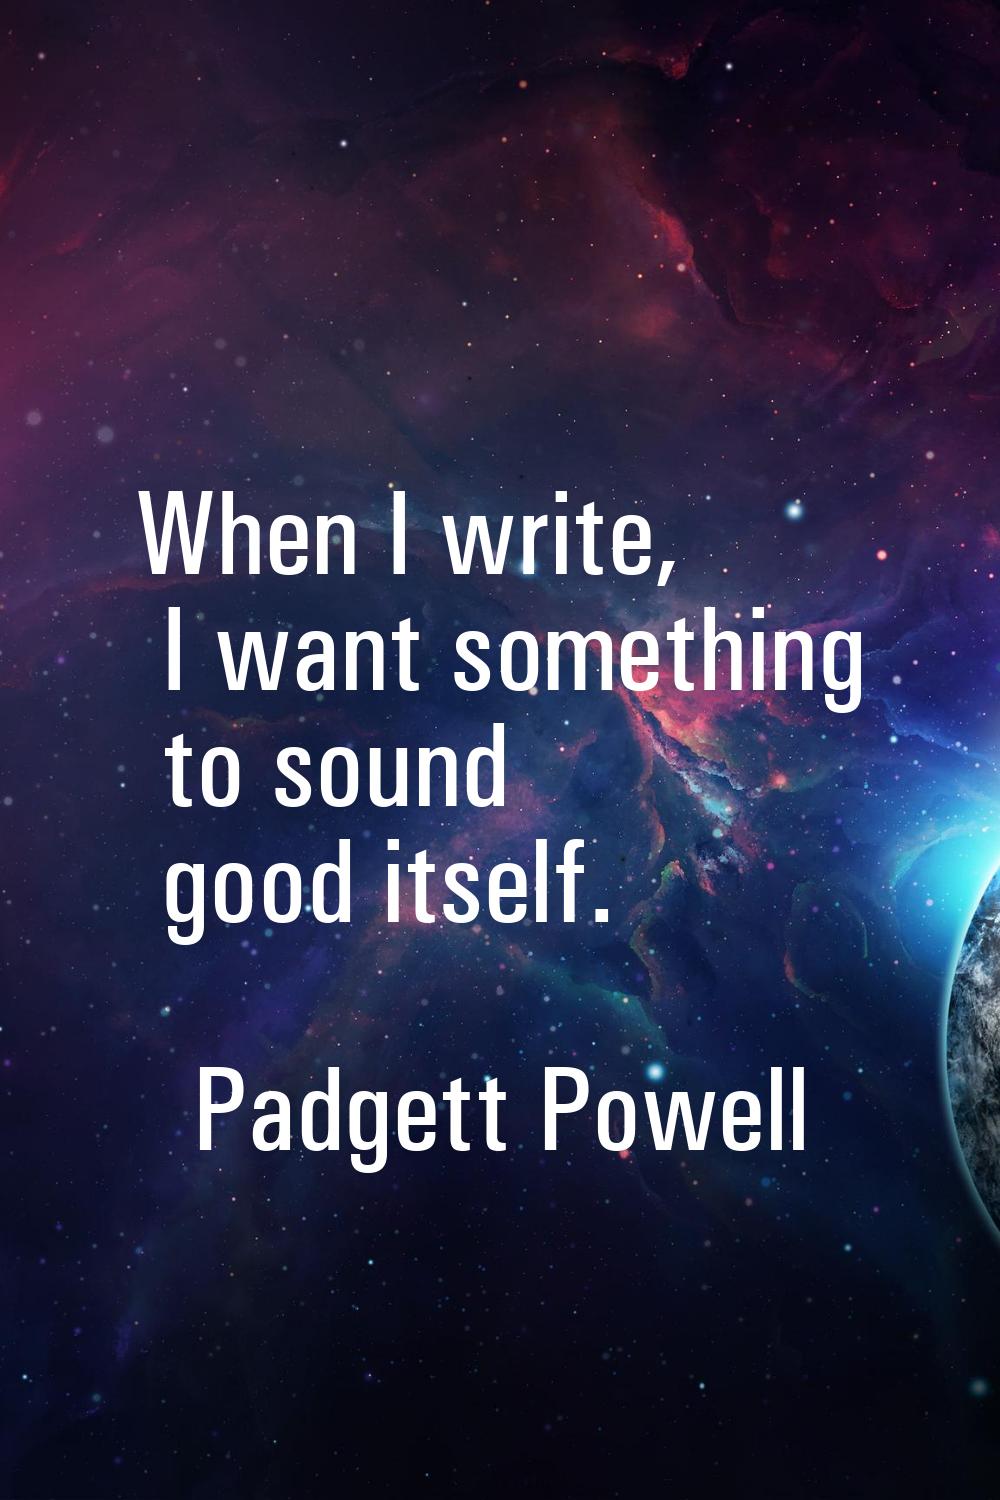 When I write, I want something to sound good itself.